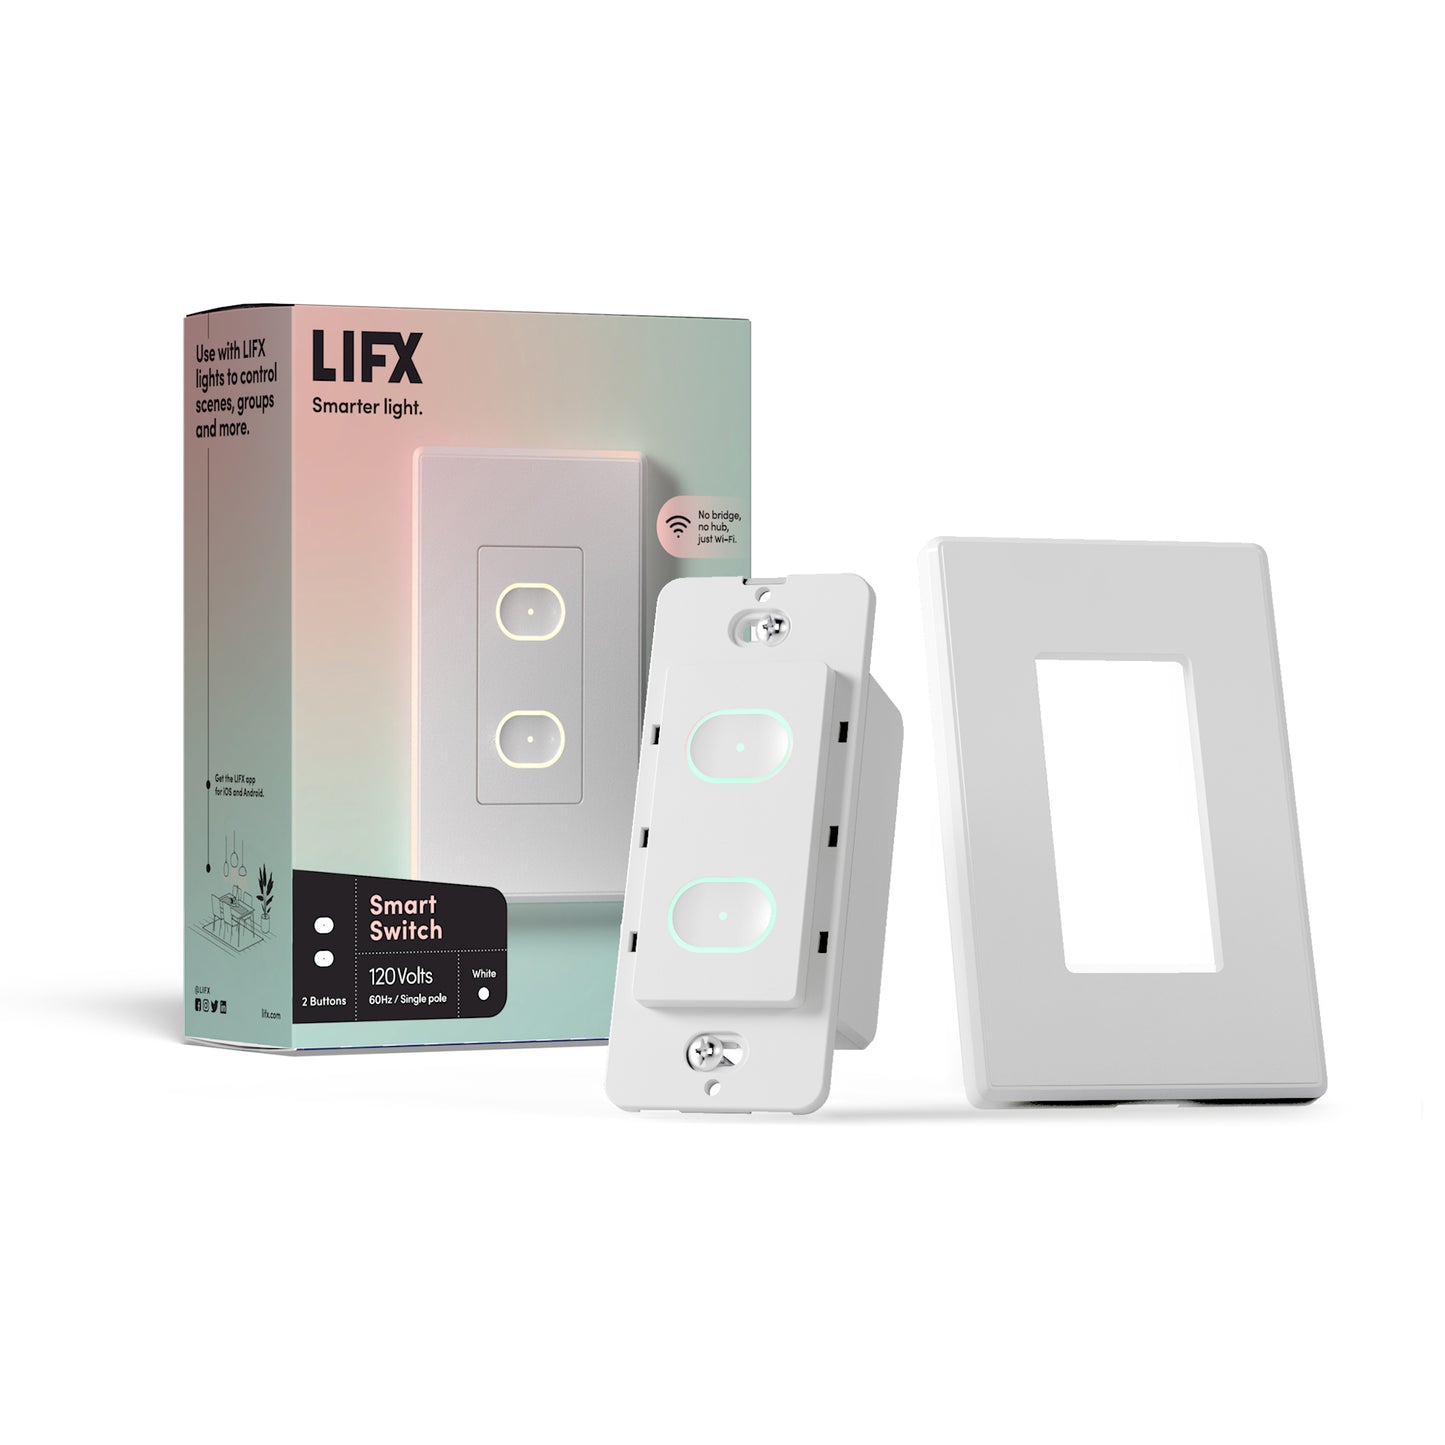 LIFX Smart Switch White 2 Button